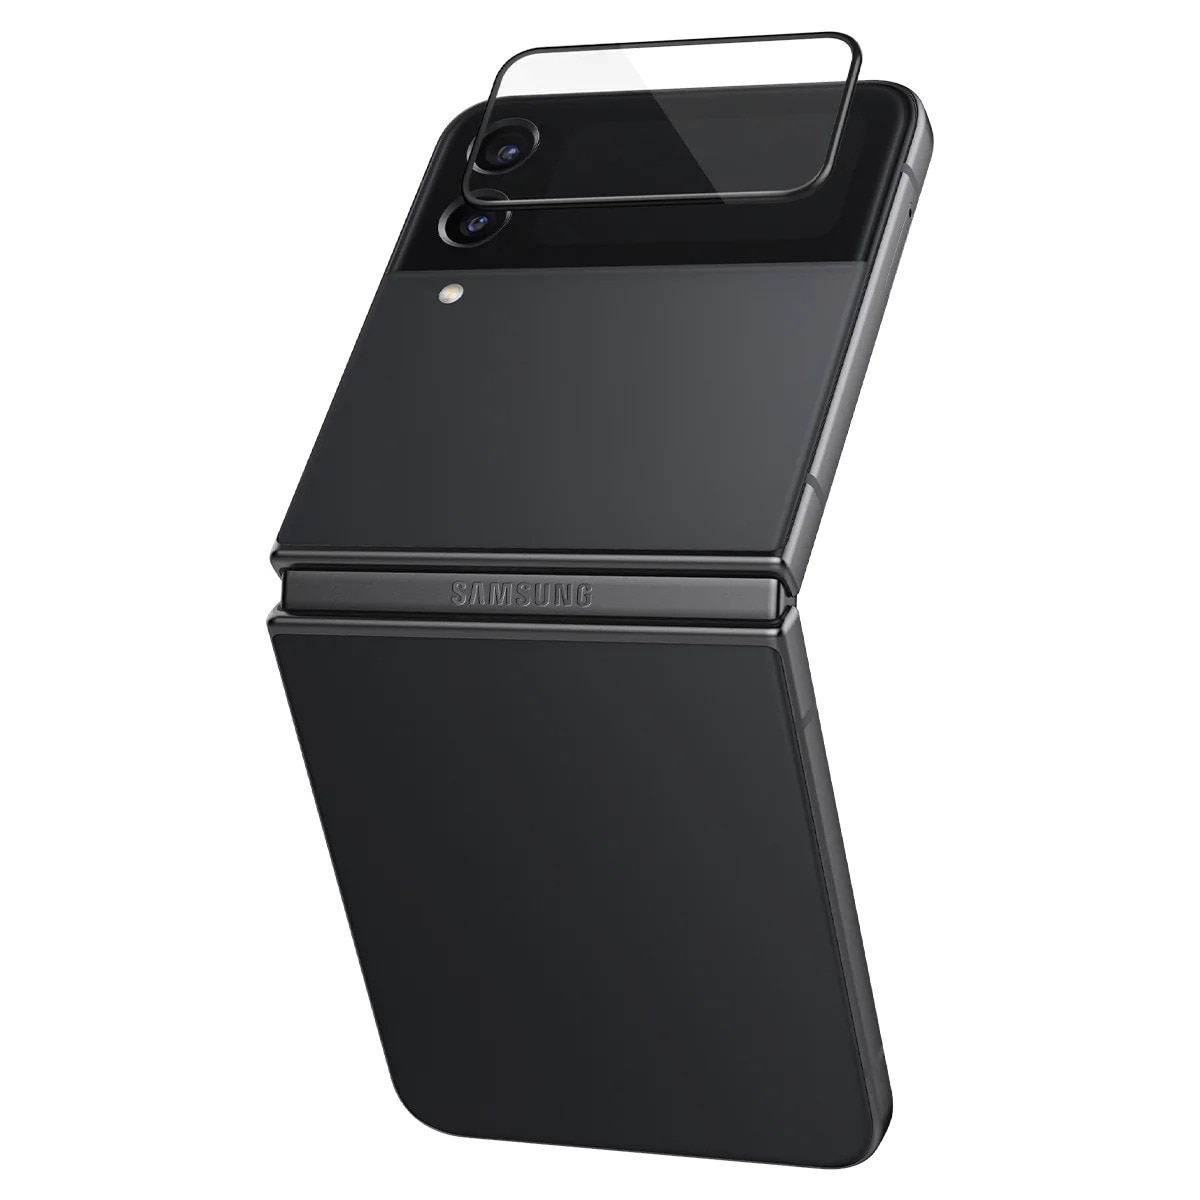 Samsung Galaxy Z Flip 4 Glas.tR EZ Fit Screen Protector + Hinge Film Black